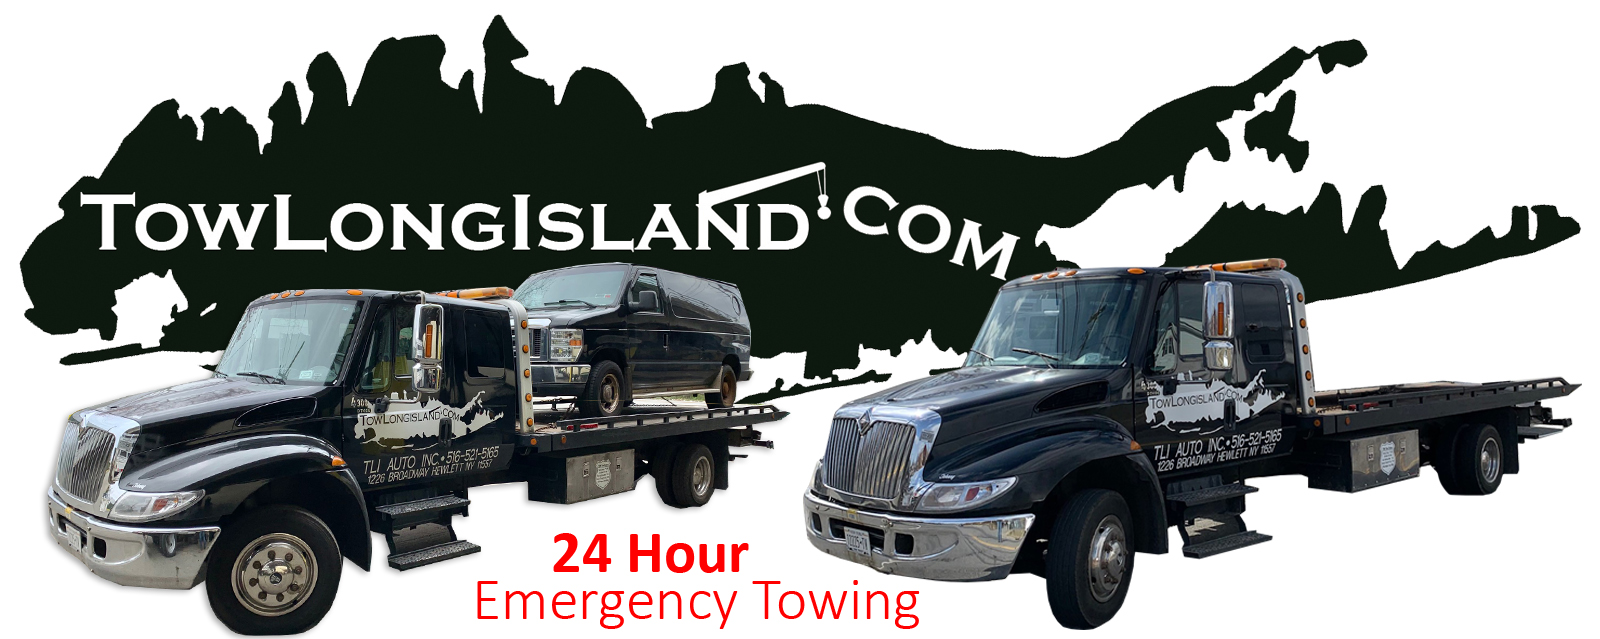 24 Hour Towing Service | Baldwin, Long Island, Nassau County, New York | TowLongIsland.com 516.521.5165